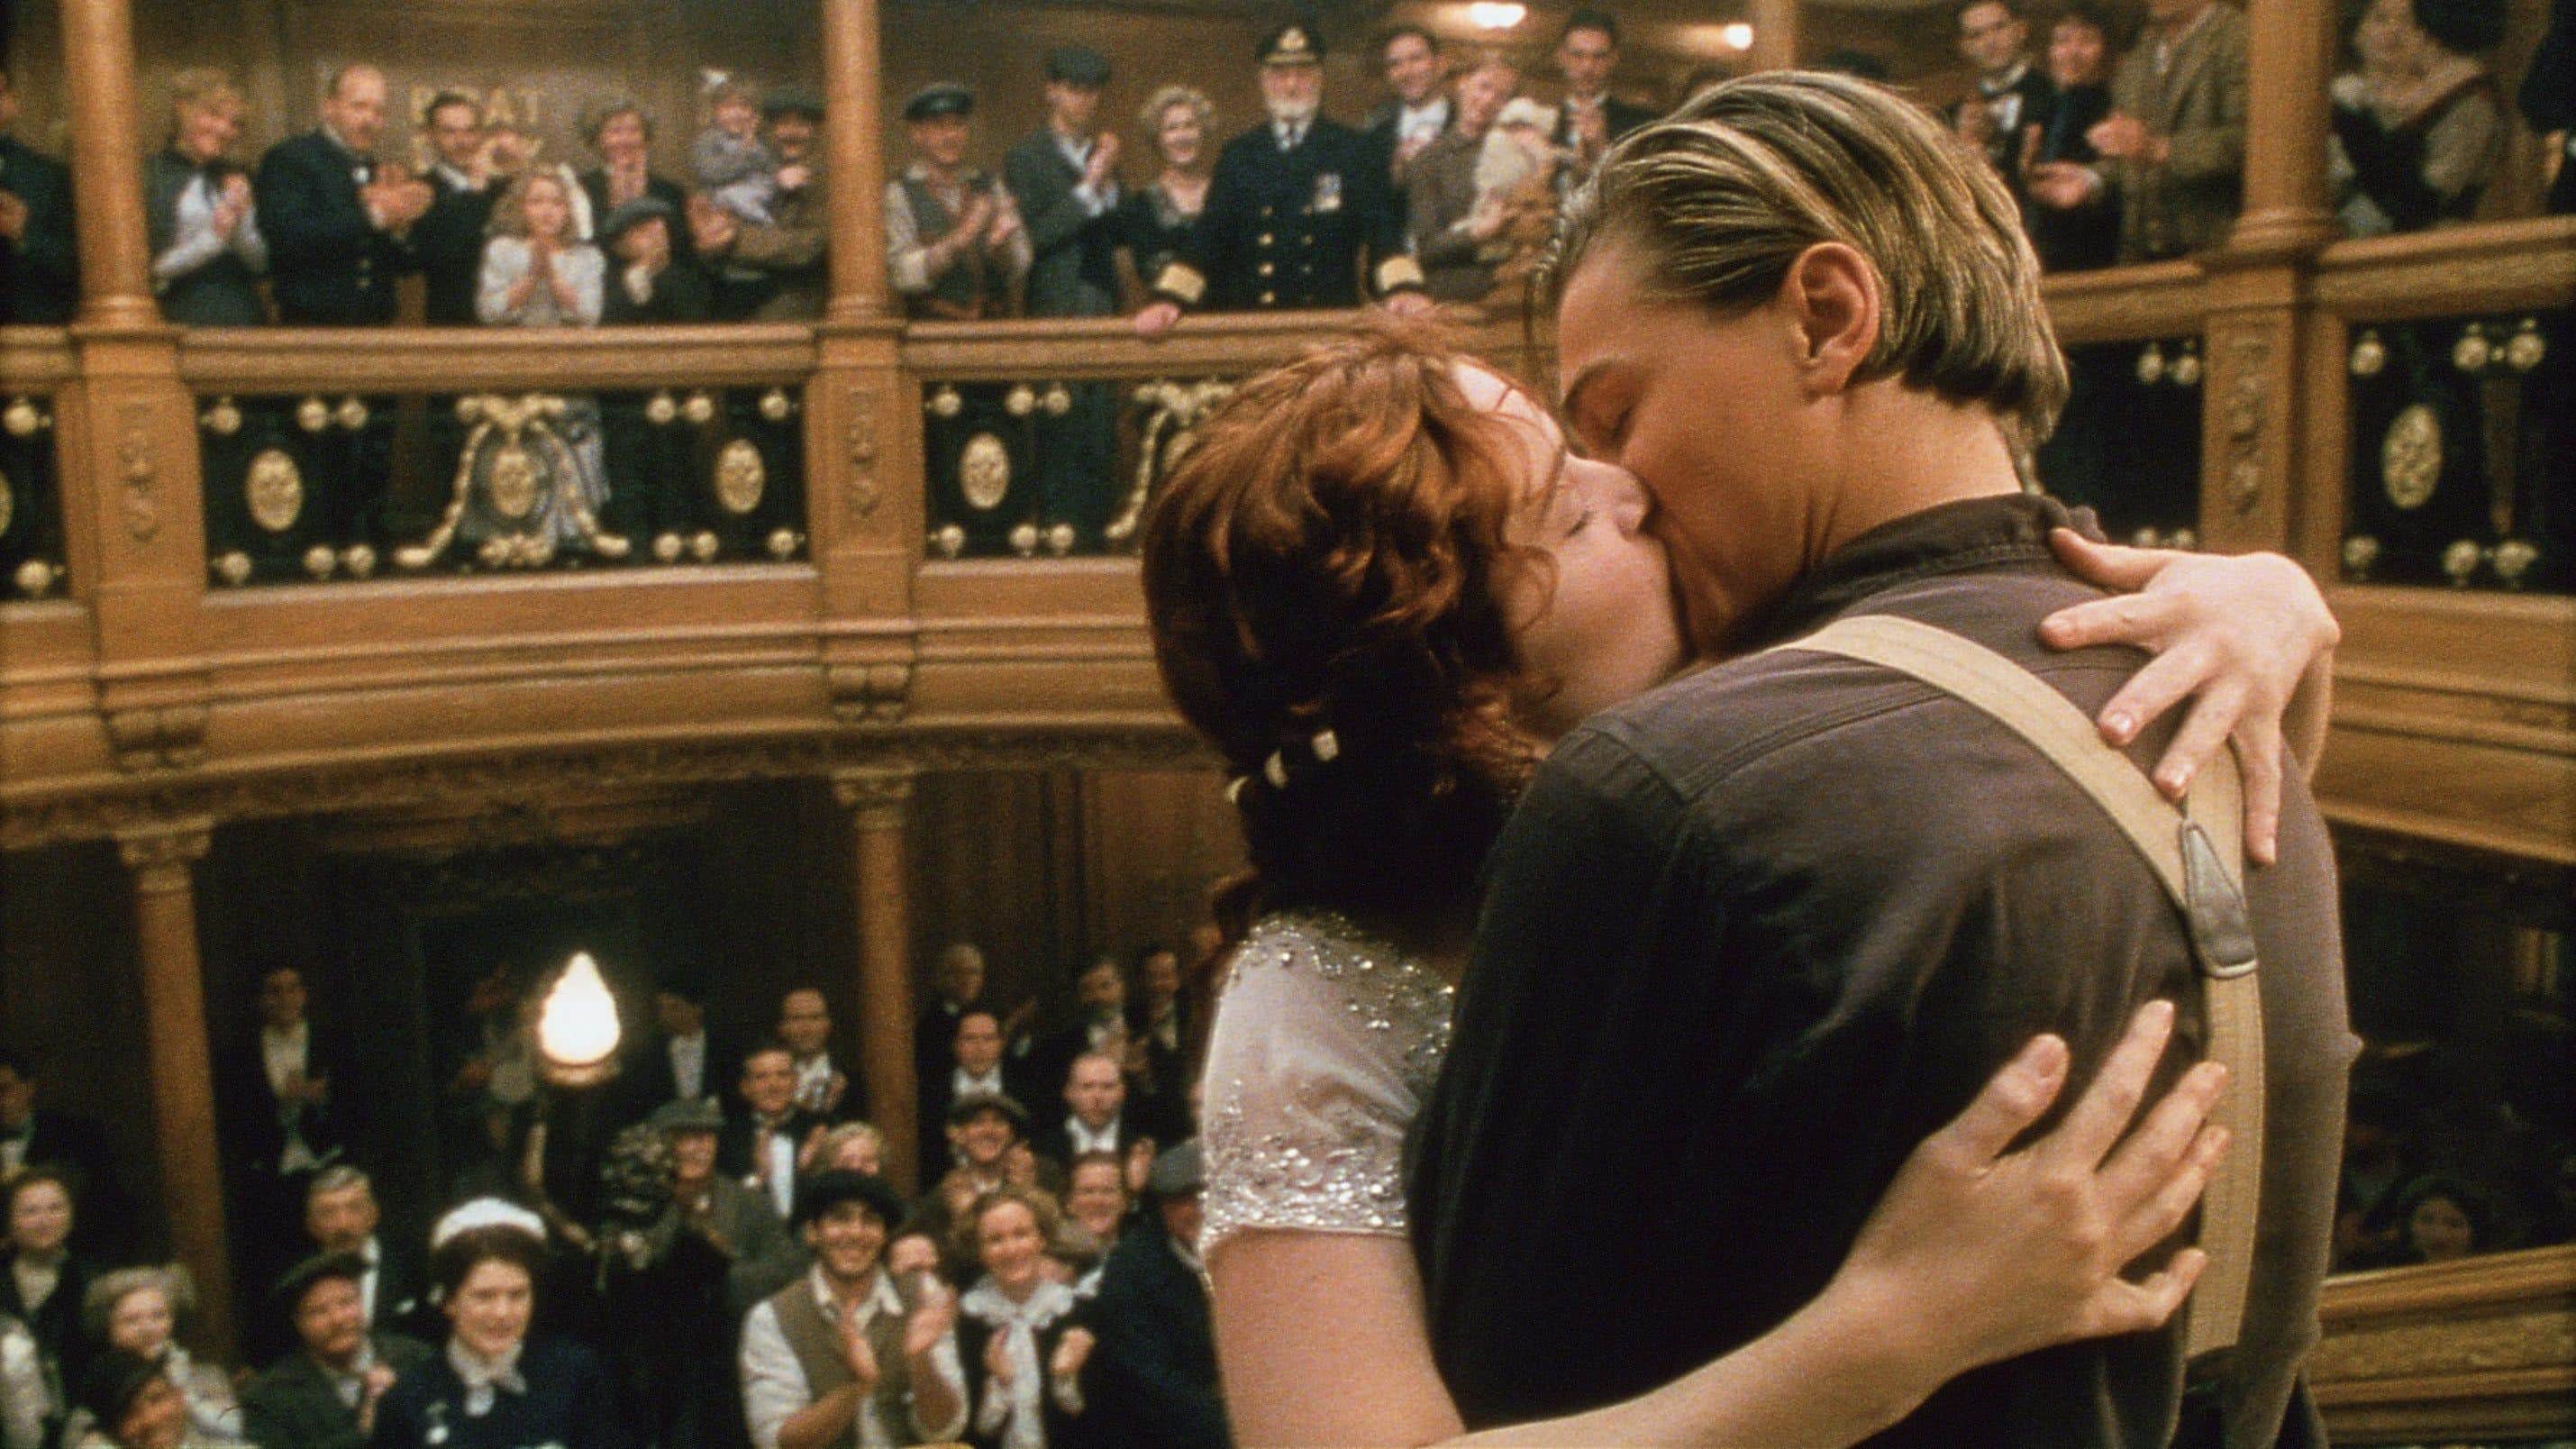 Момент из кинофильма. Леонардо ди Каприо Титаник. Титаник 1997 Джек. Кейт Уинслет 1997 Титаник.